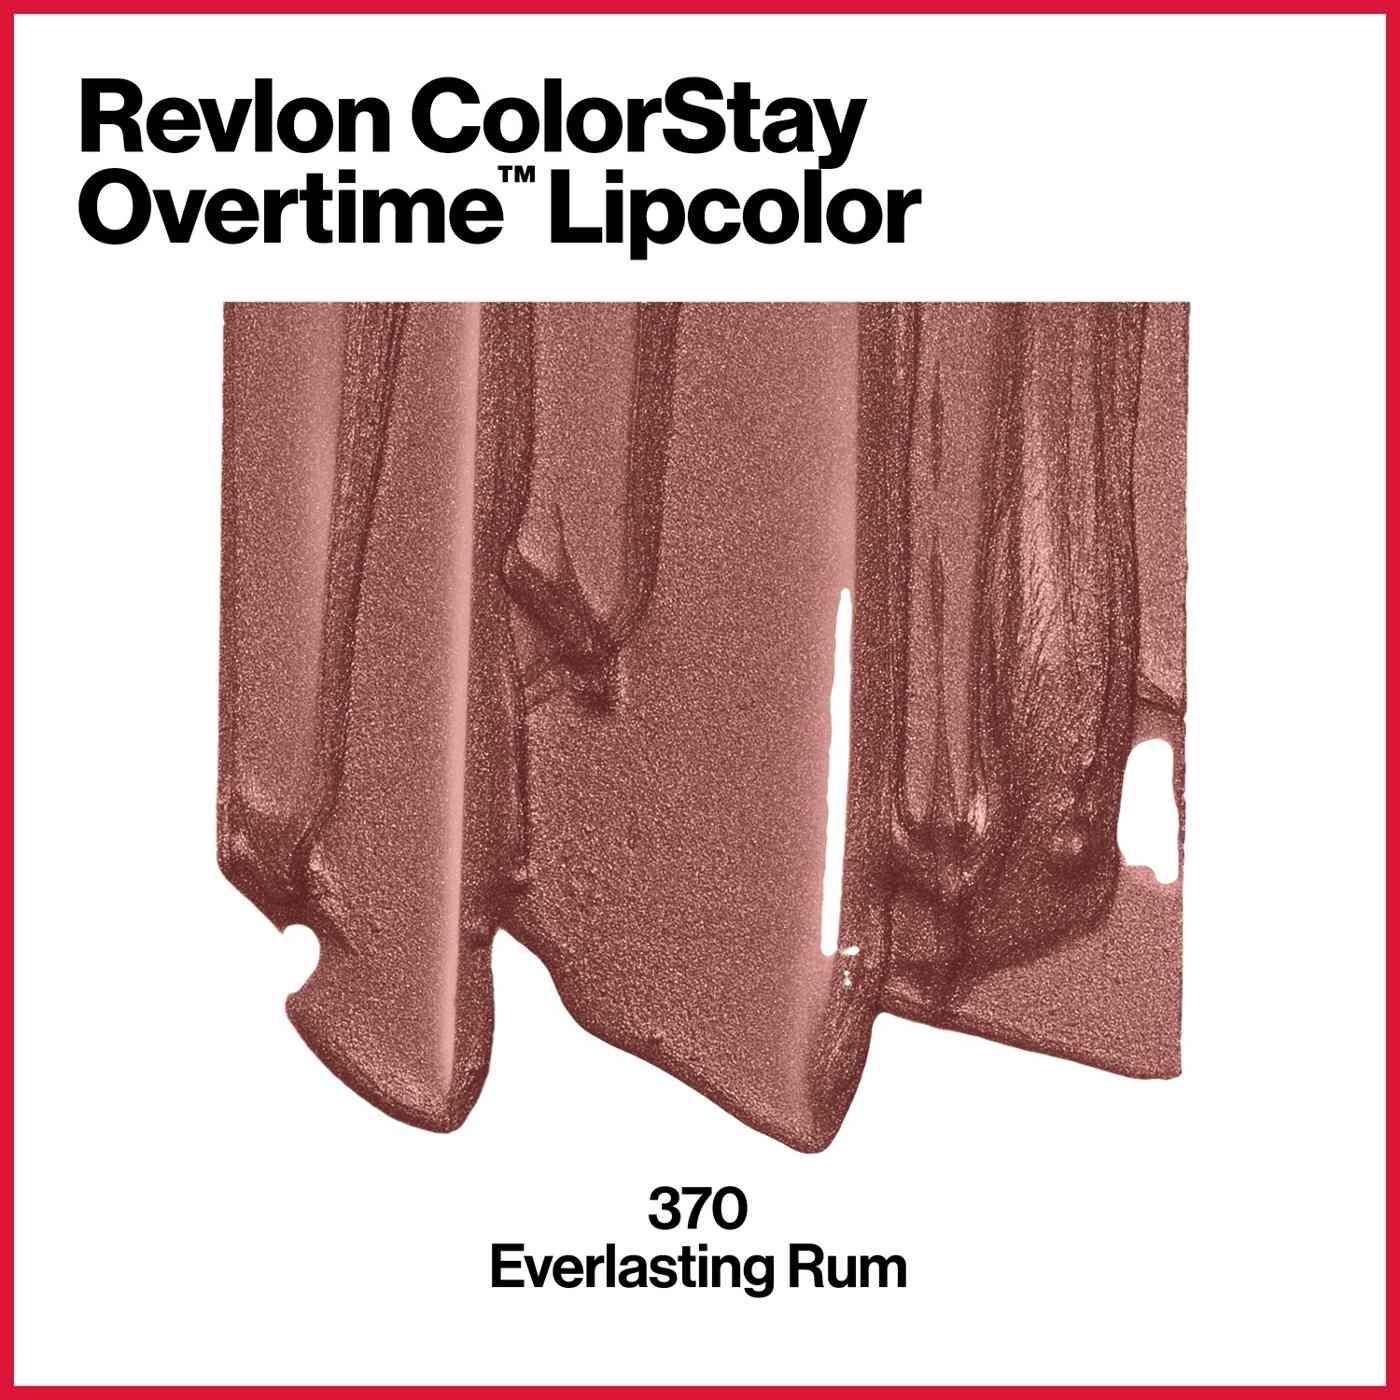 Revlon ColorStay Overtime Lipcolor, Long Wearing Liquid Lipstick, 370 Everlasting Rum; image 7 of 7